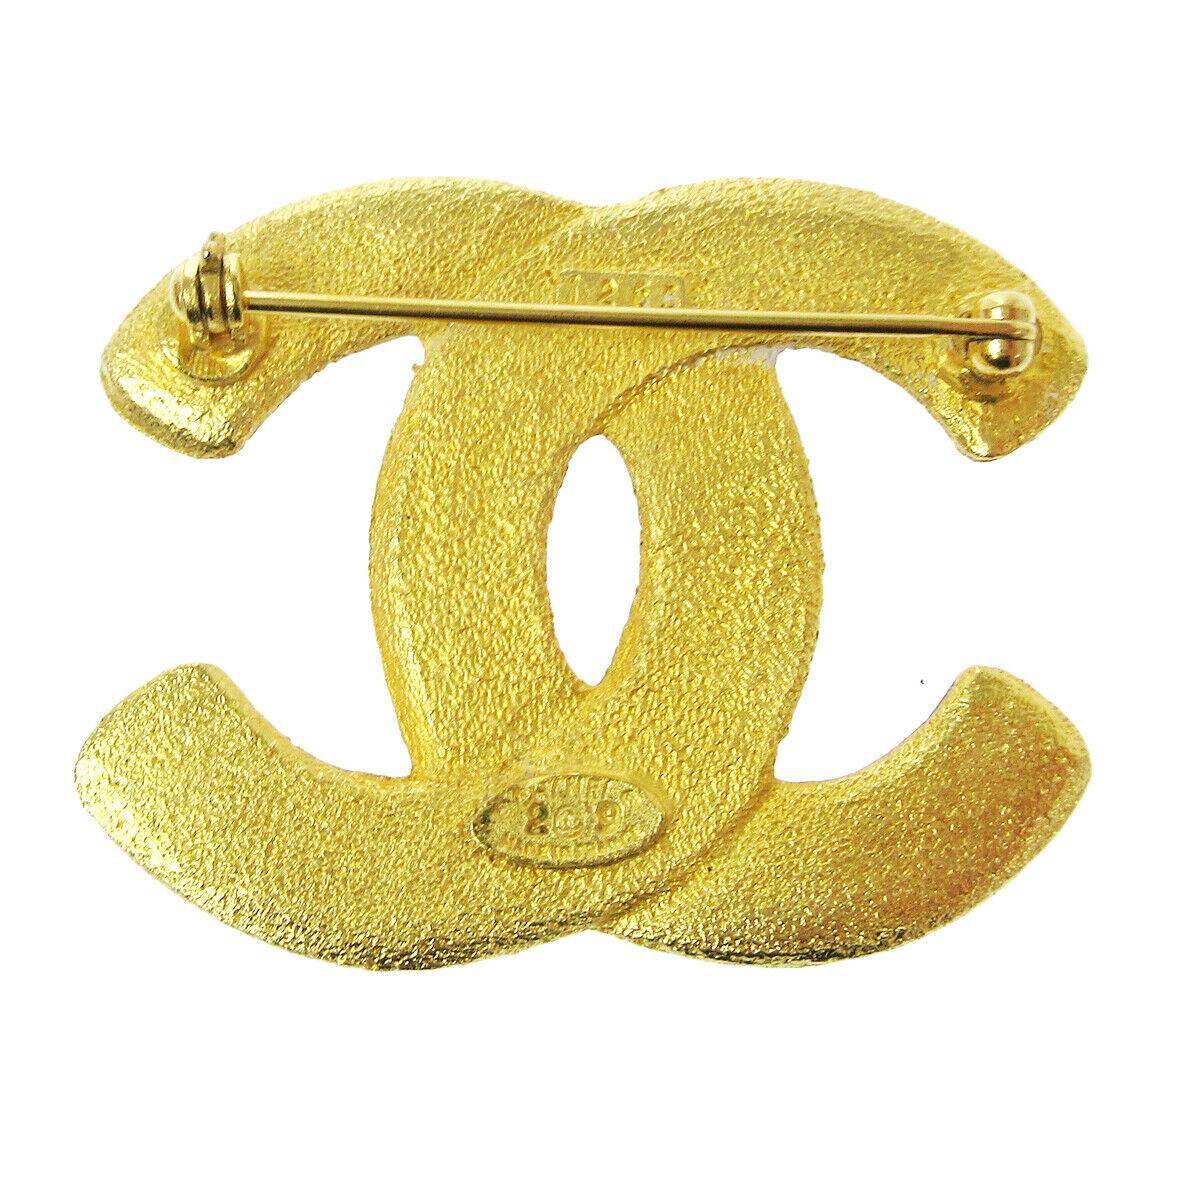 Metal
Gold tone
Pin closure
Made in France
Measures 1.75